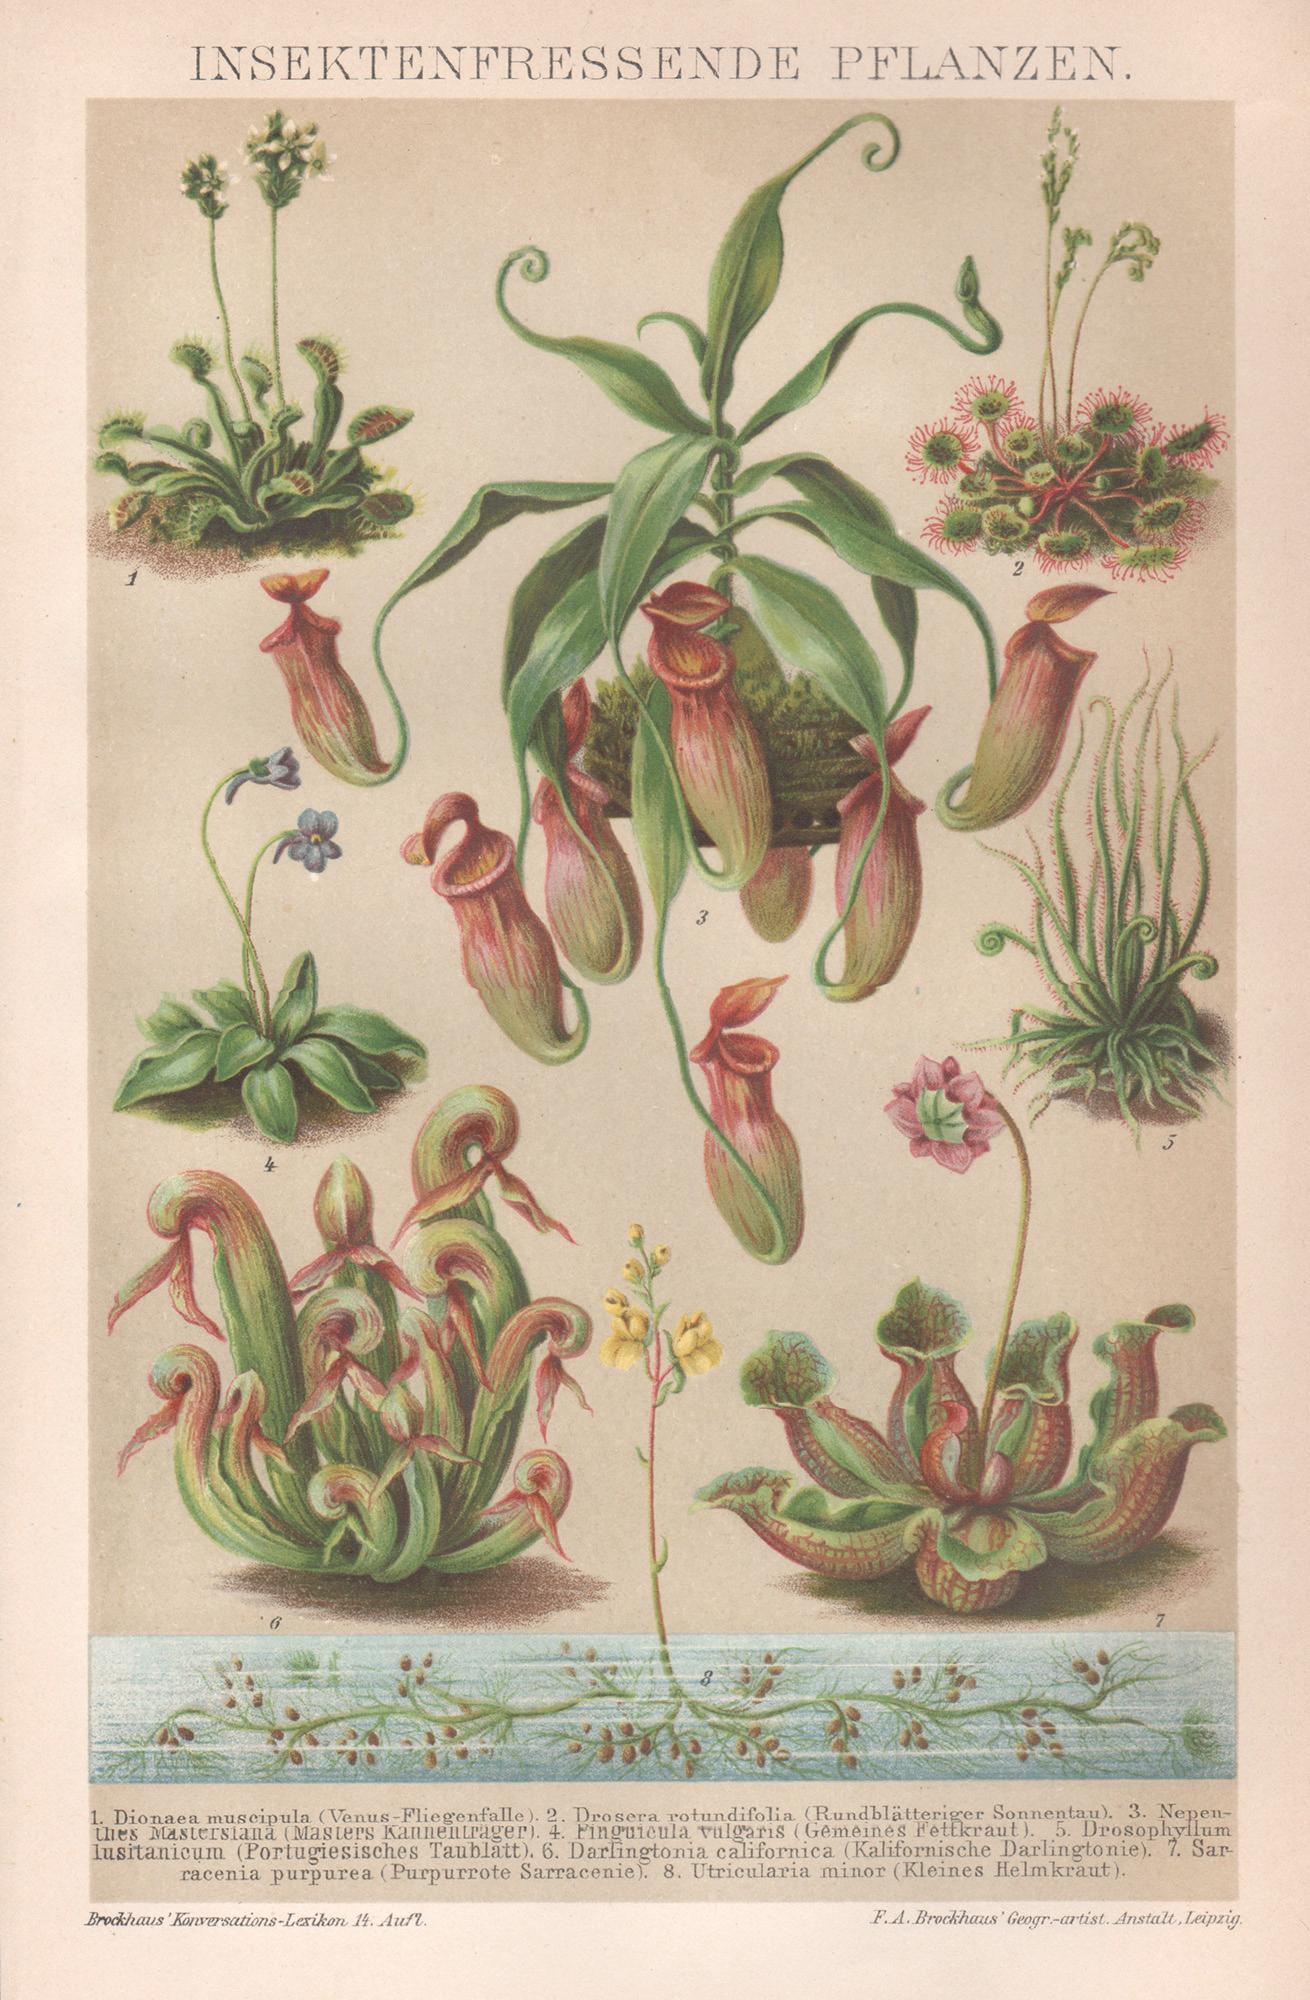 Unknown Still-Life Print - Insektenfressende Pflanzen (Carnivorous Plants), German antique botanical print